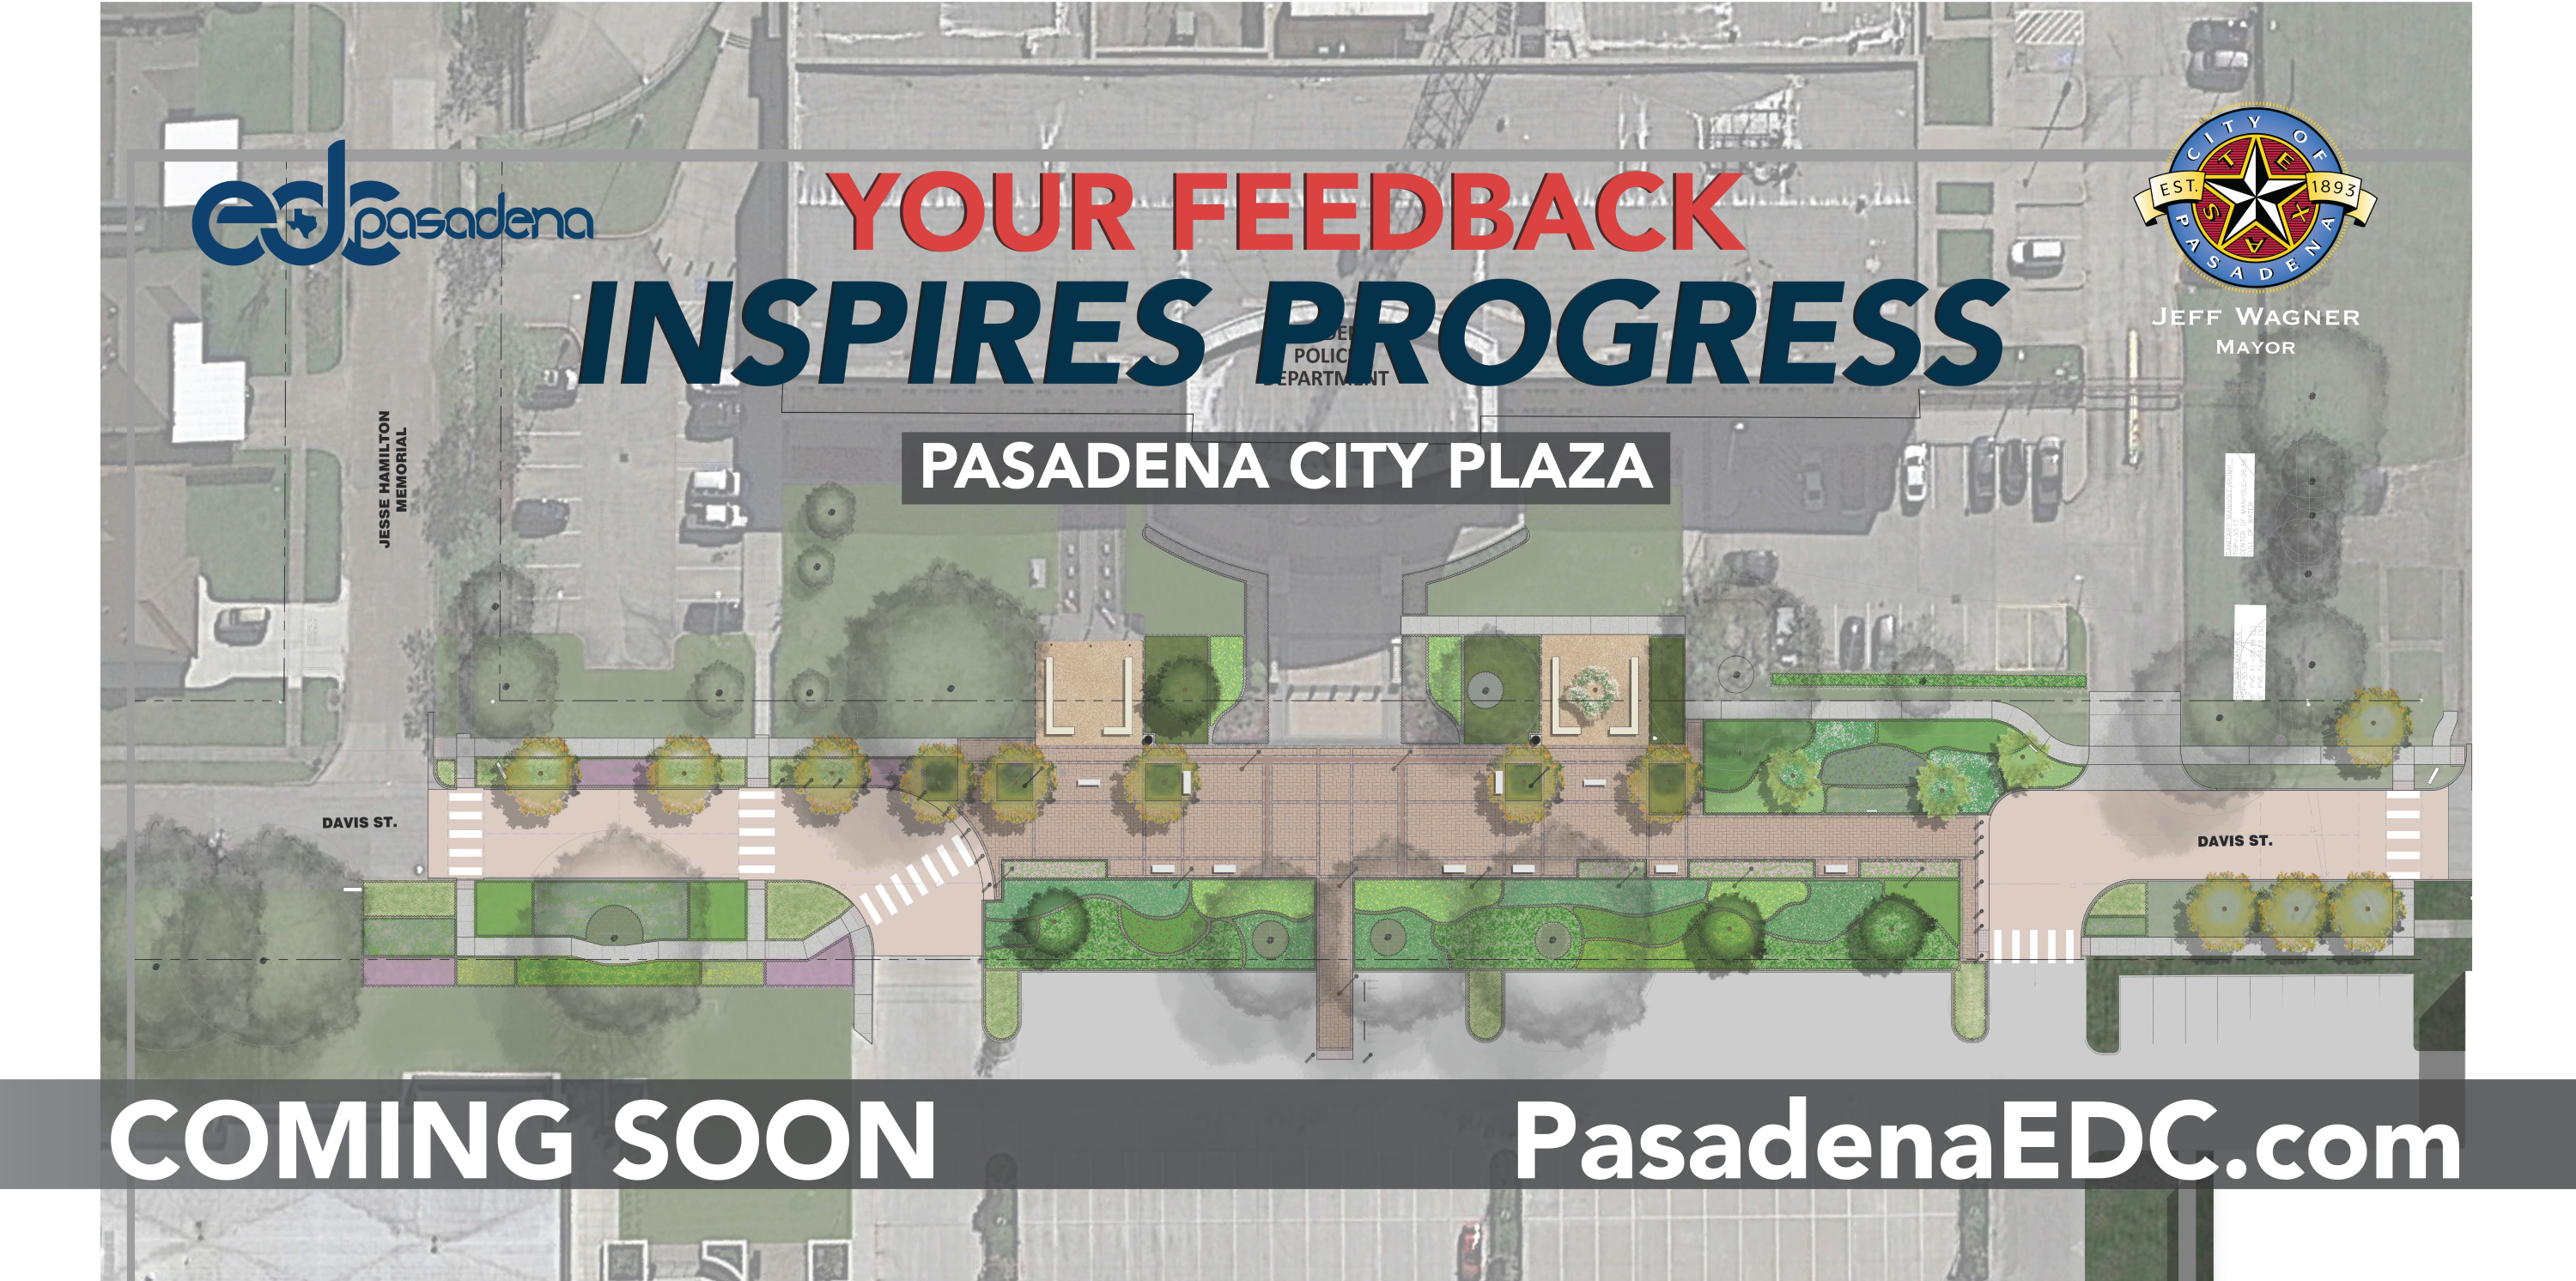 Click here to open Pasadena City Plaza